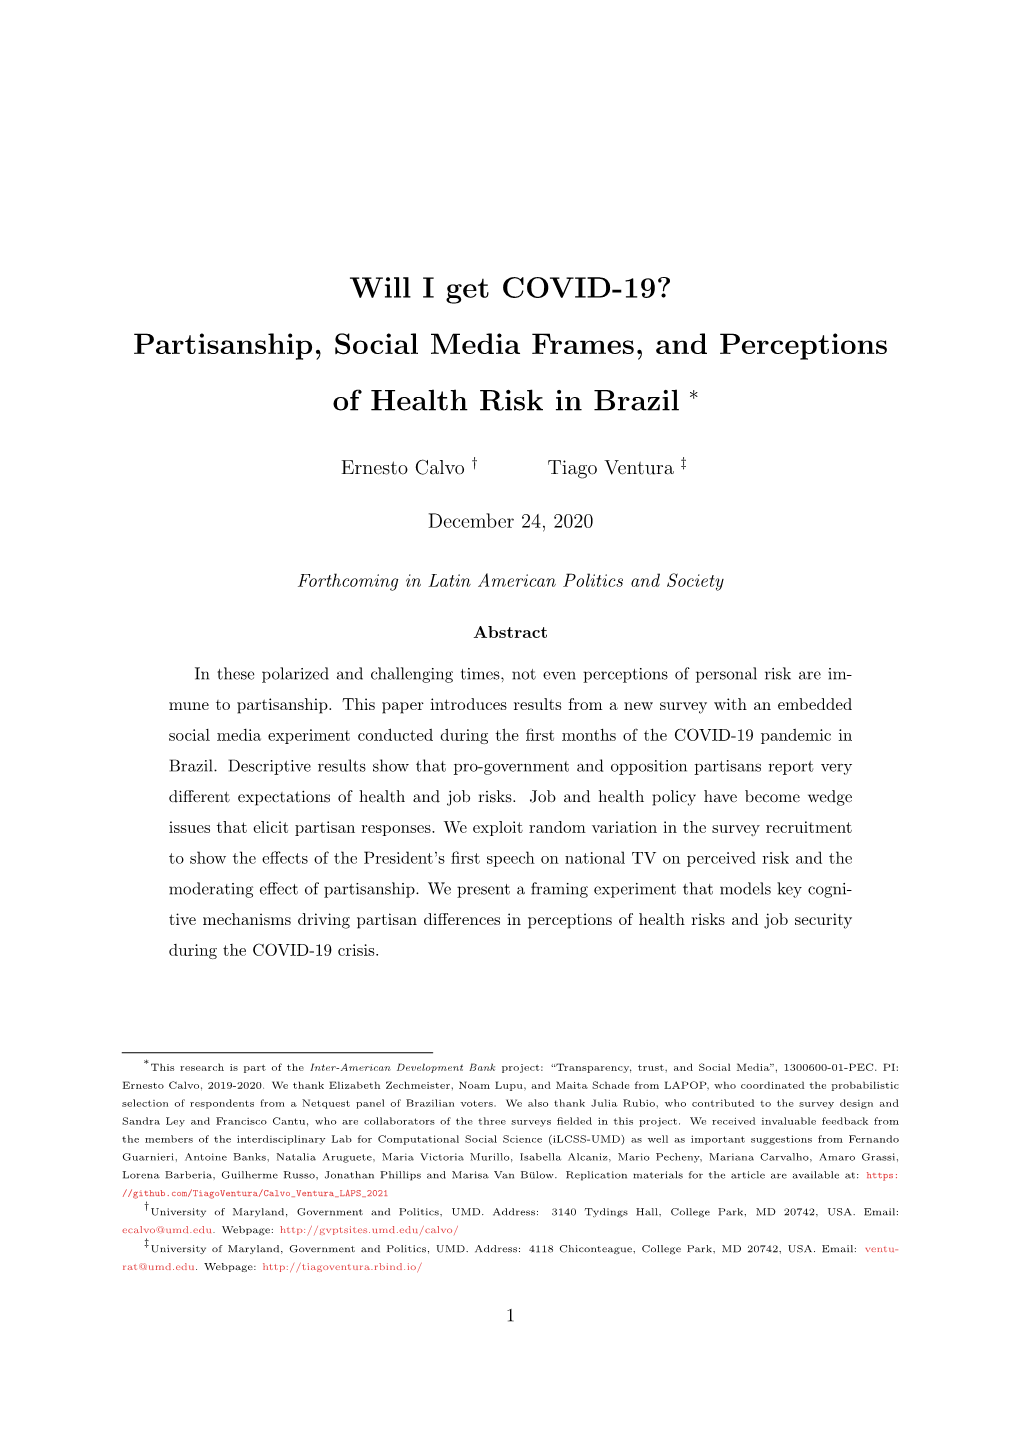 Will I Get COVID-19? Partisanship, Social Media Frames, and Perceptions of Health Risk in Brazil ∗